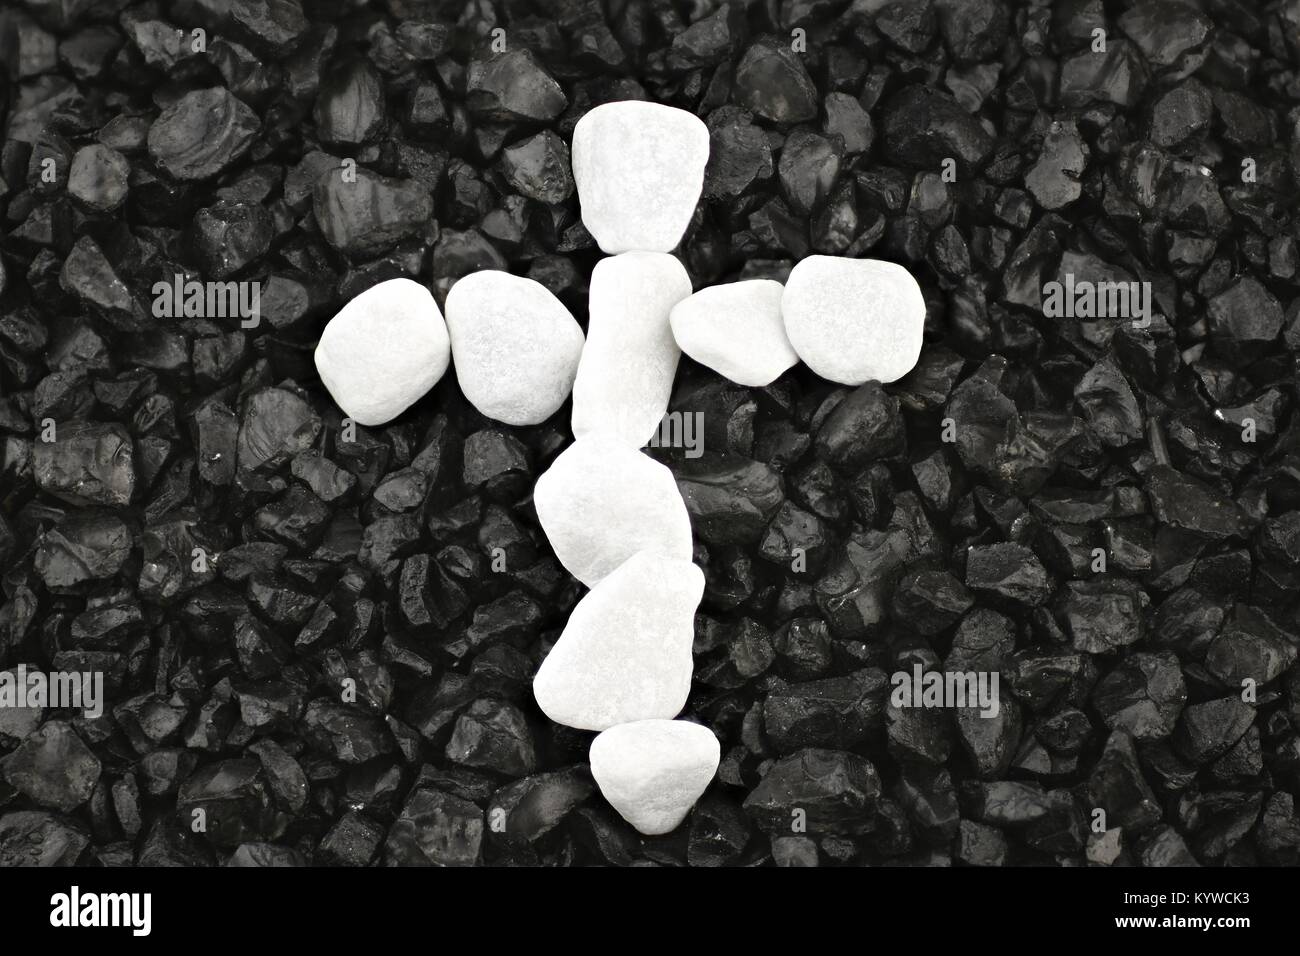 Cross of white pebbles against background of black grit Stock Photo